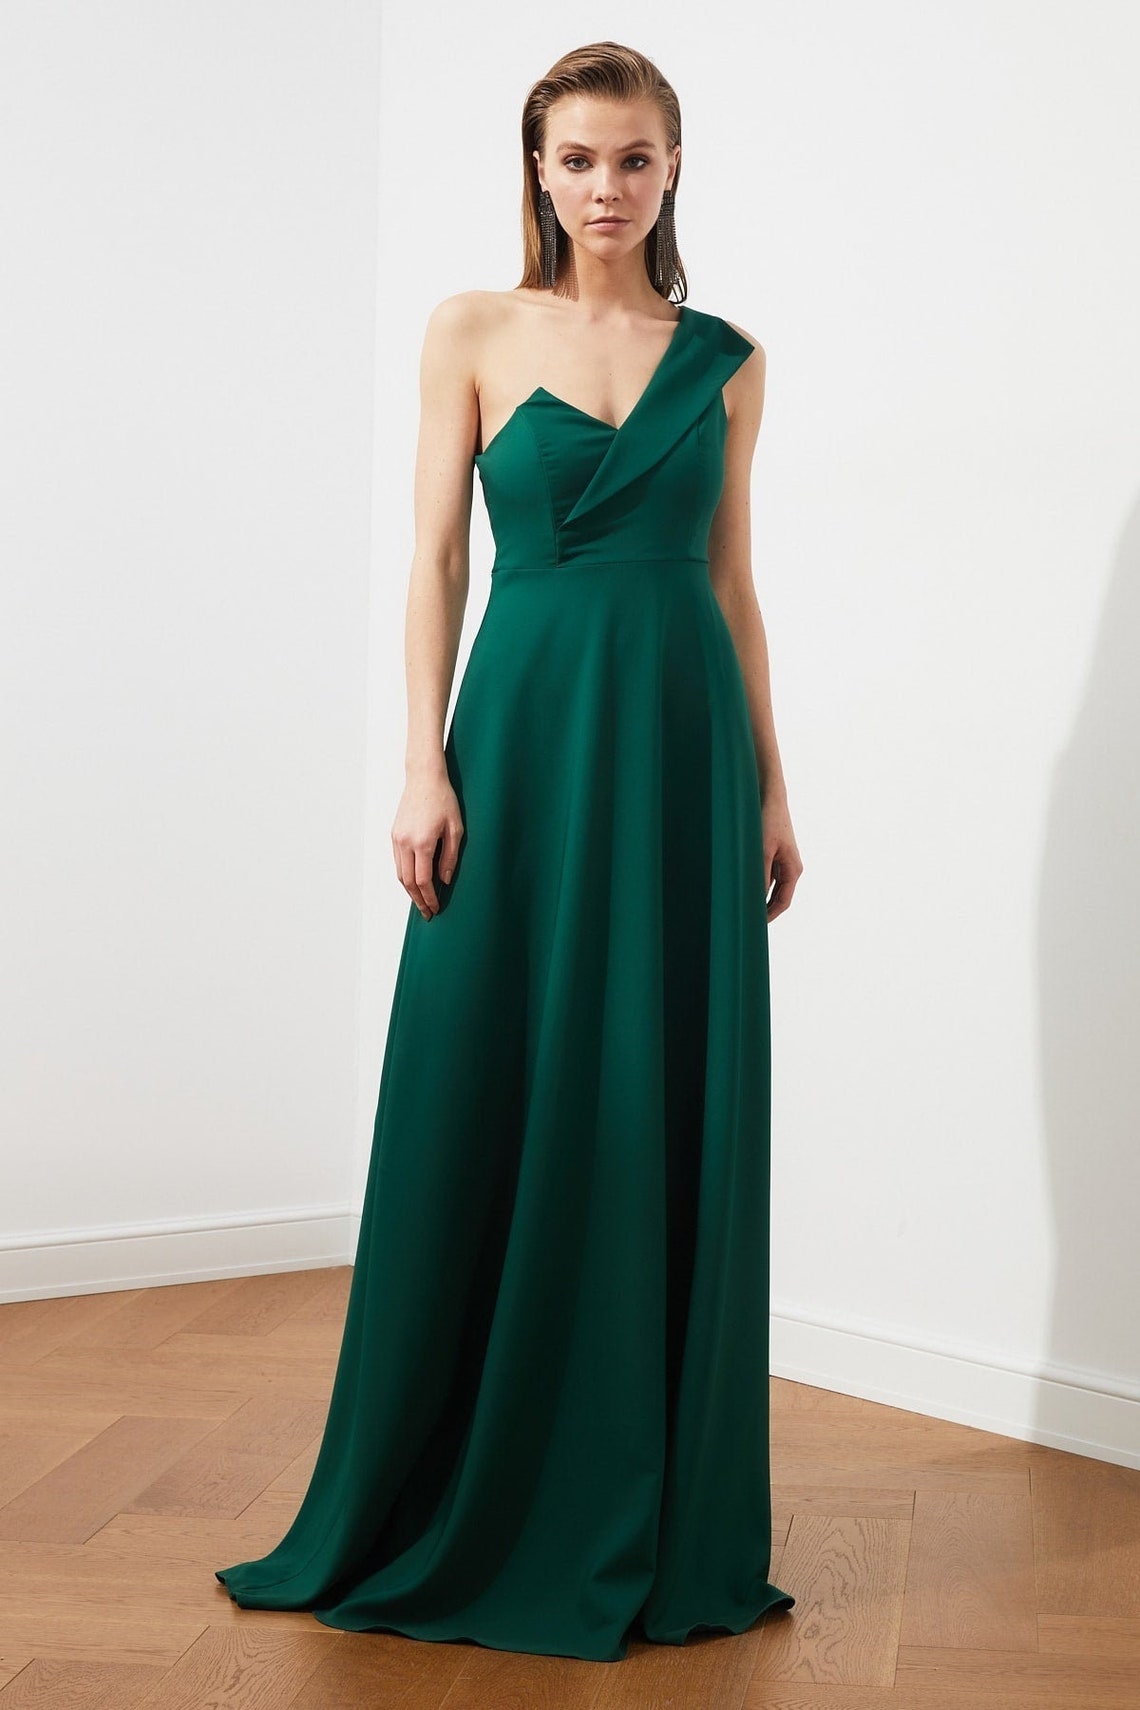 Emerald Green Prom Dress For Women Long Graduation Wedding | Etsy